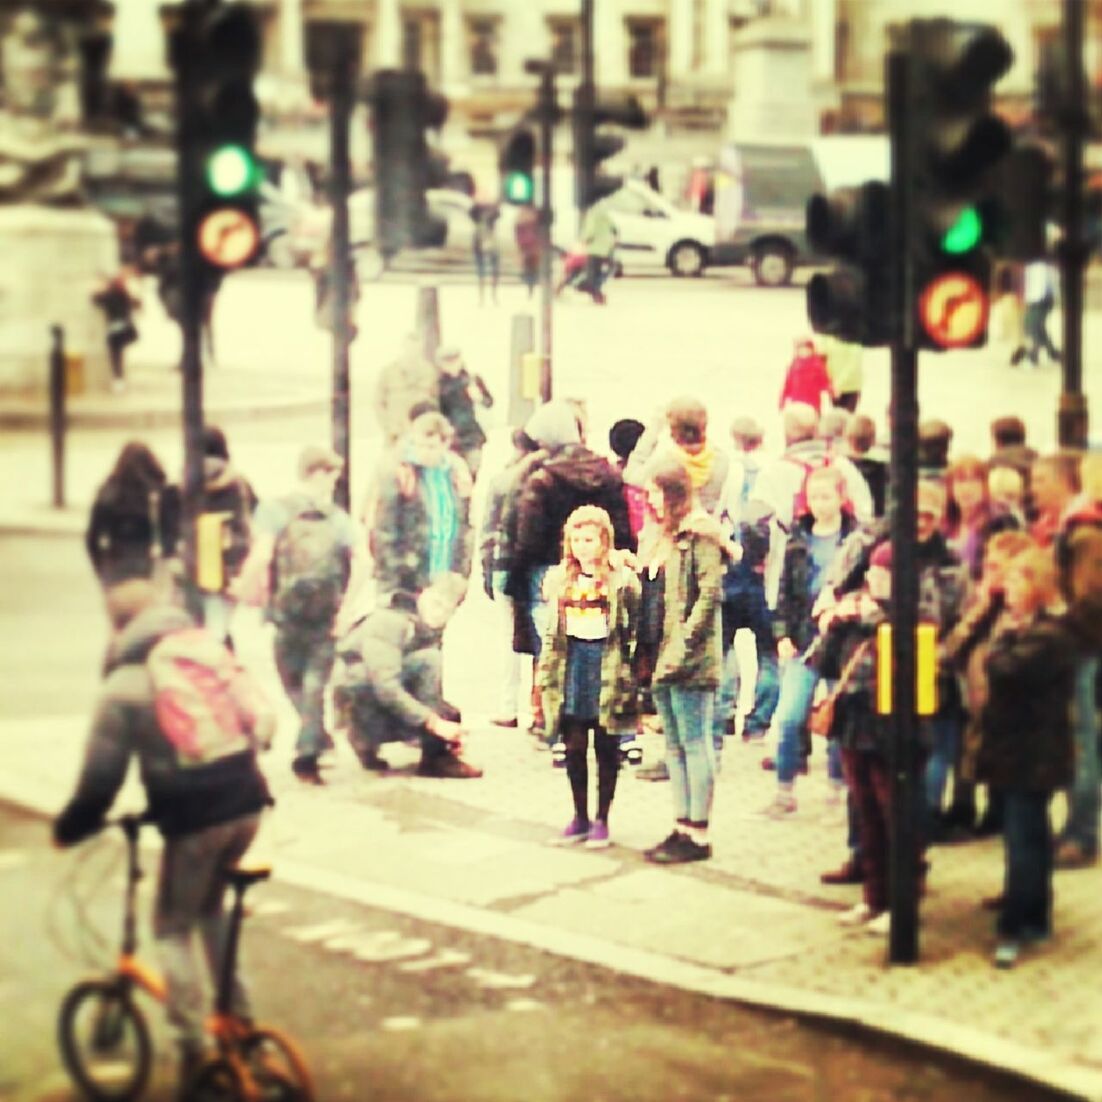 Group of people on city sidewalk